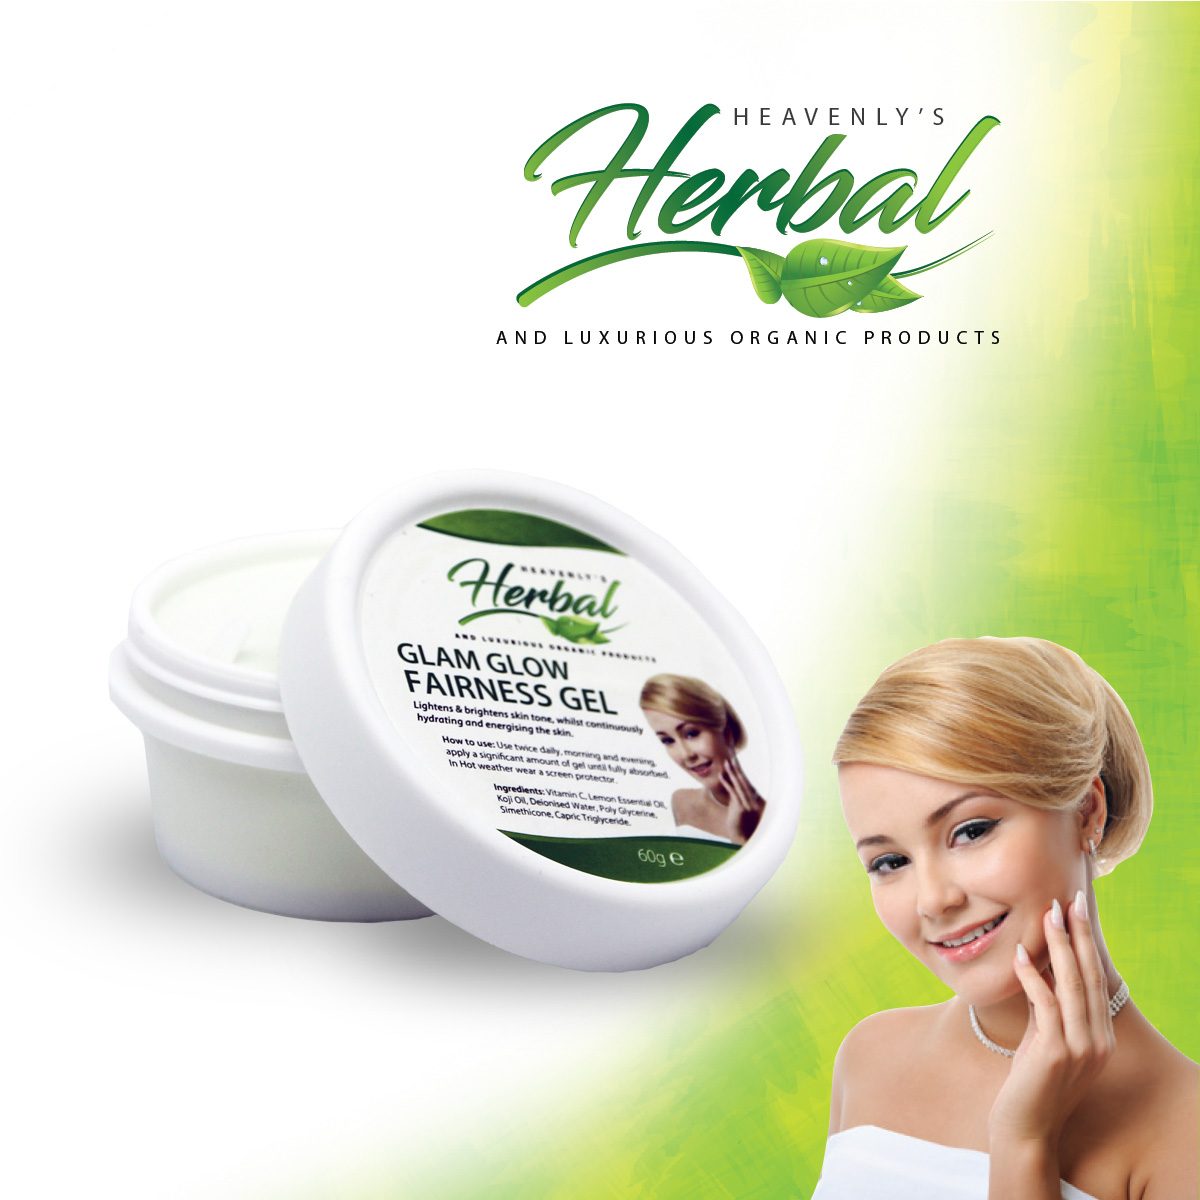 Glam glow Fairness gel skin moisturiser hydrating and energising skin cream